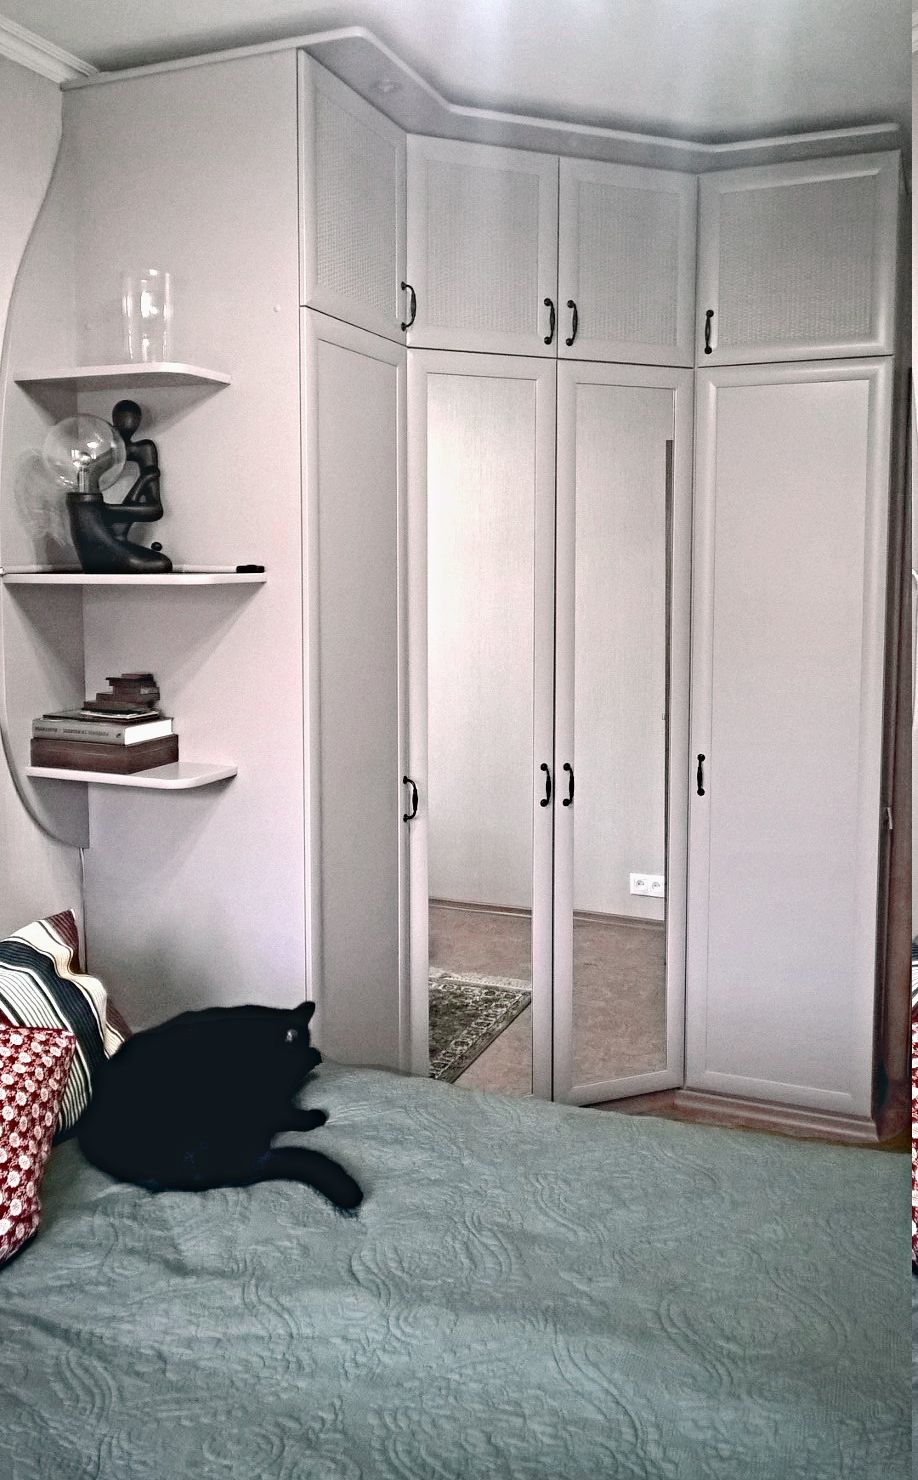 покраска шкафа своими руками в домашних условиях в серый цвет